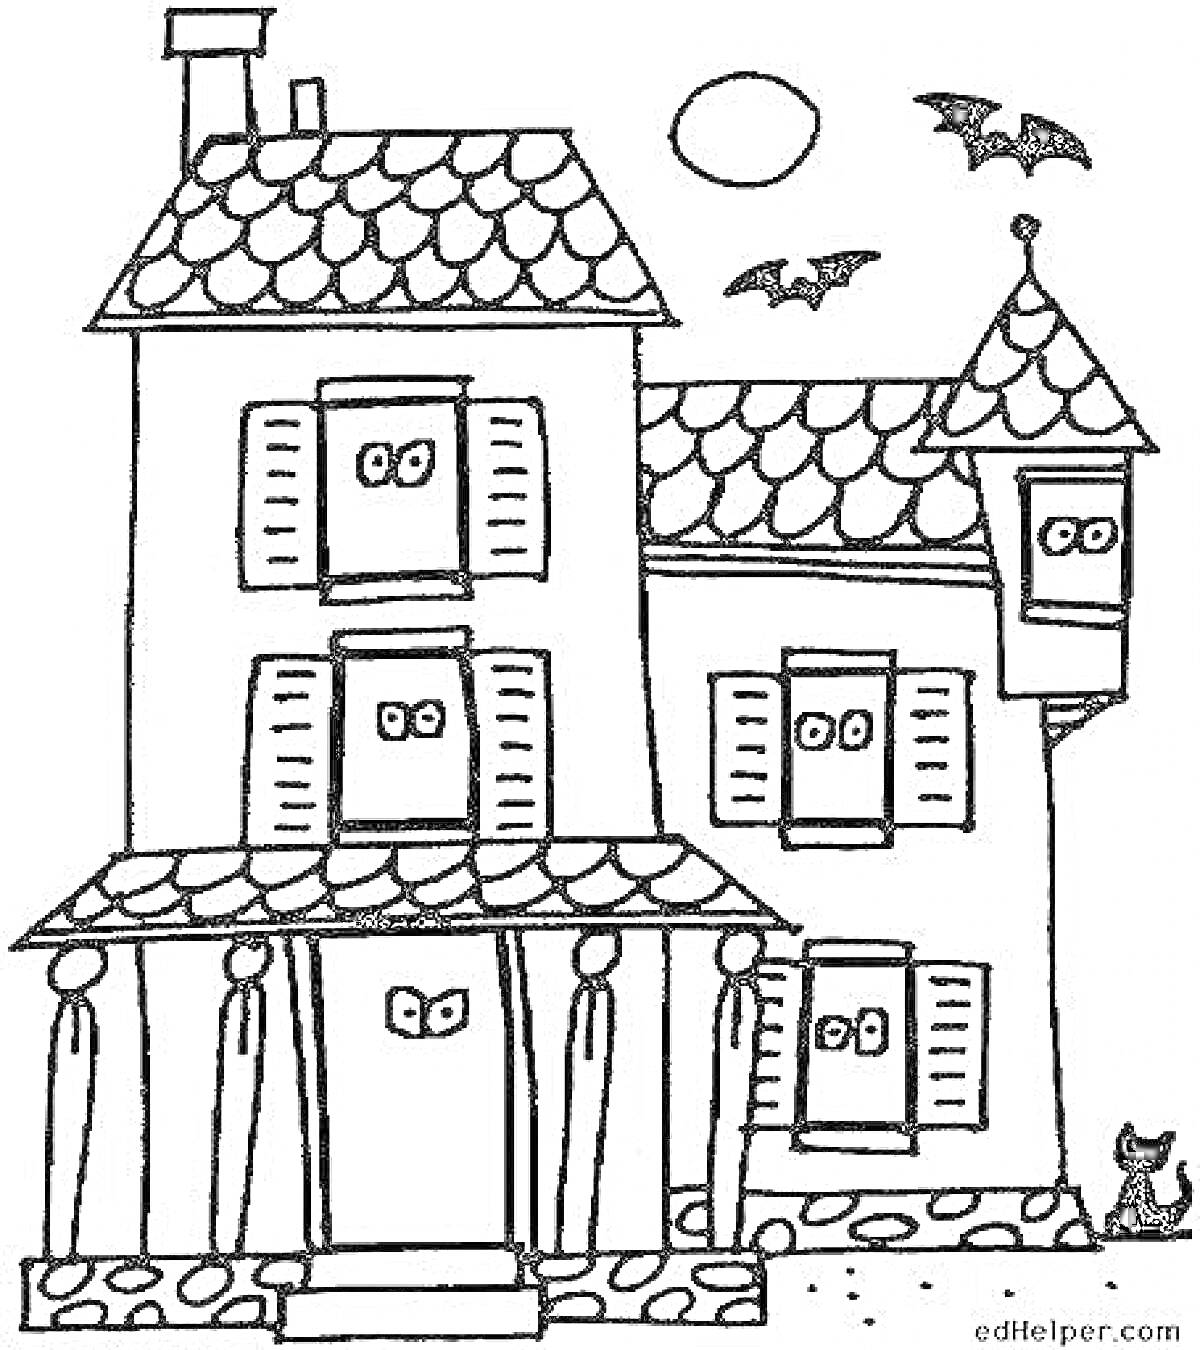 Раскраска Дом с привидениями, окна с глазами, летучие мыши, кошка, солнце.